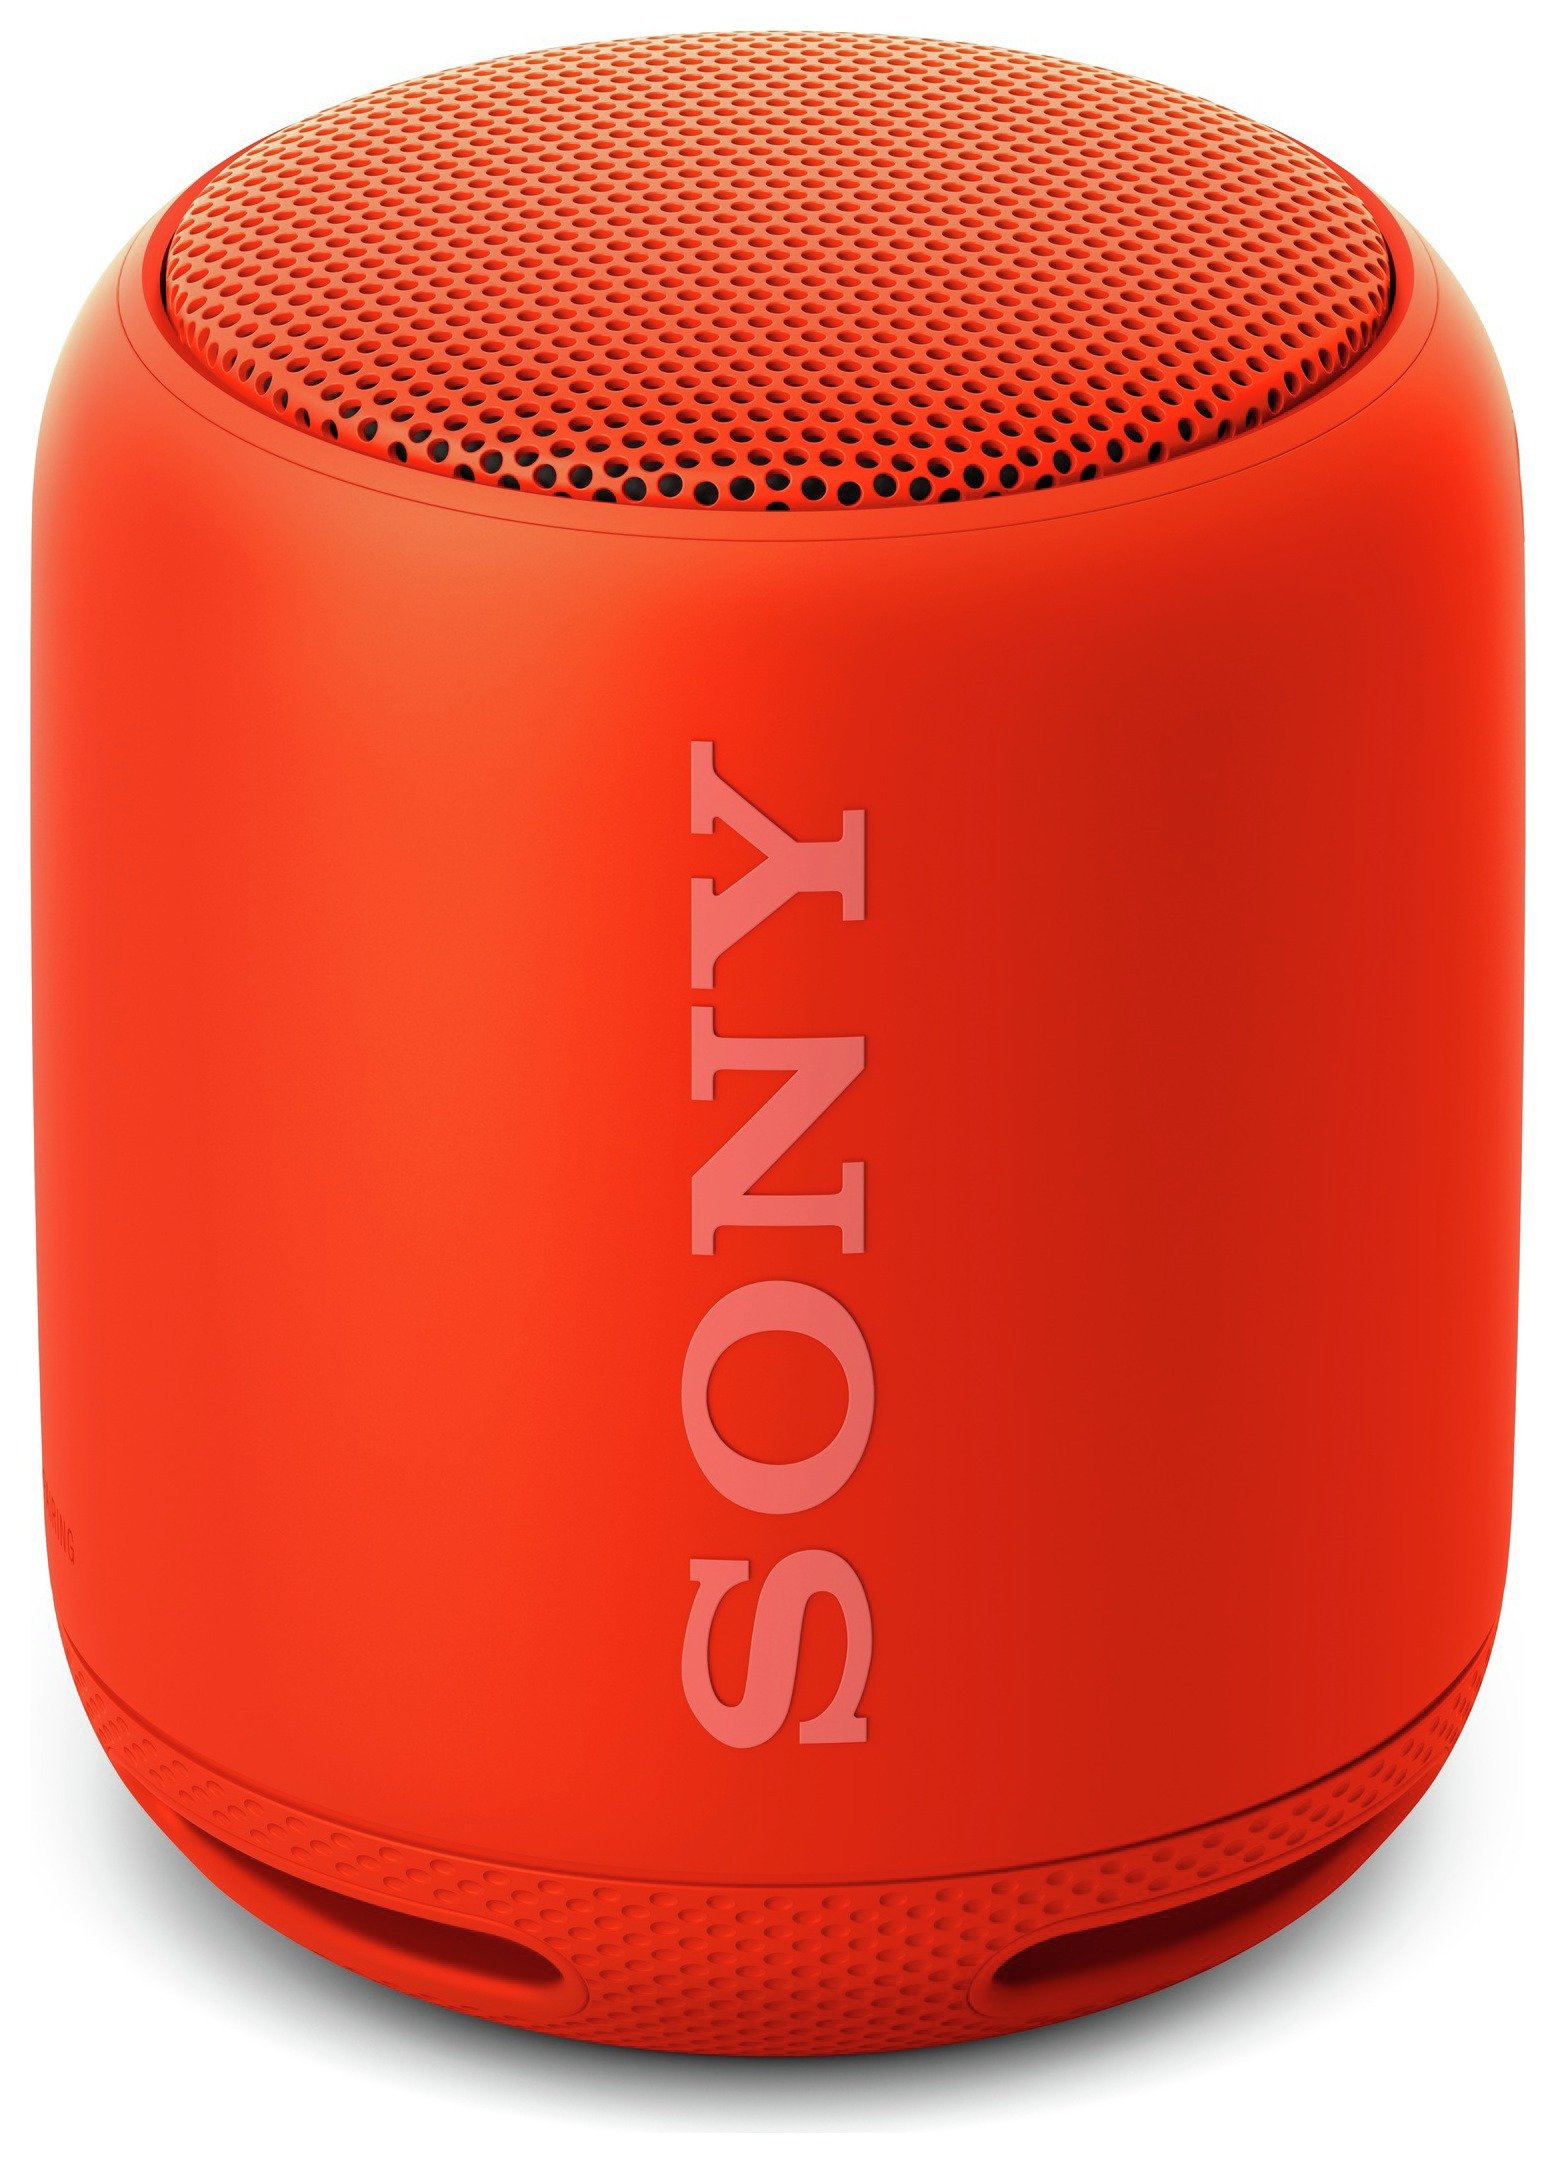 Sony SRS-XB10 Portable Wireless Speaker - Red Reviews